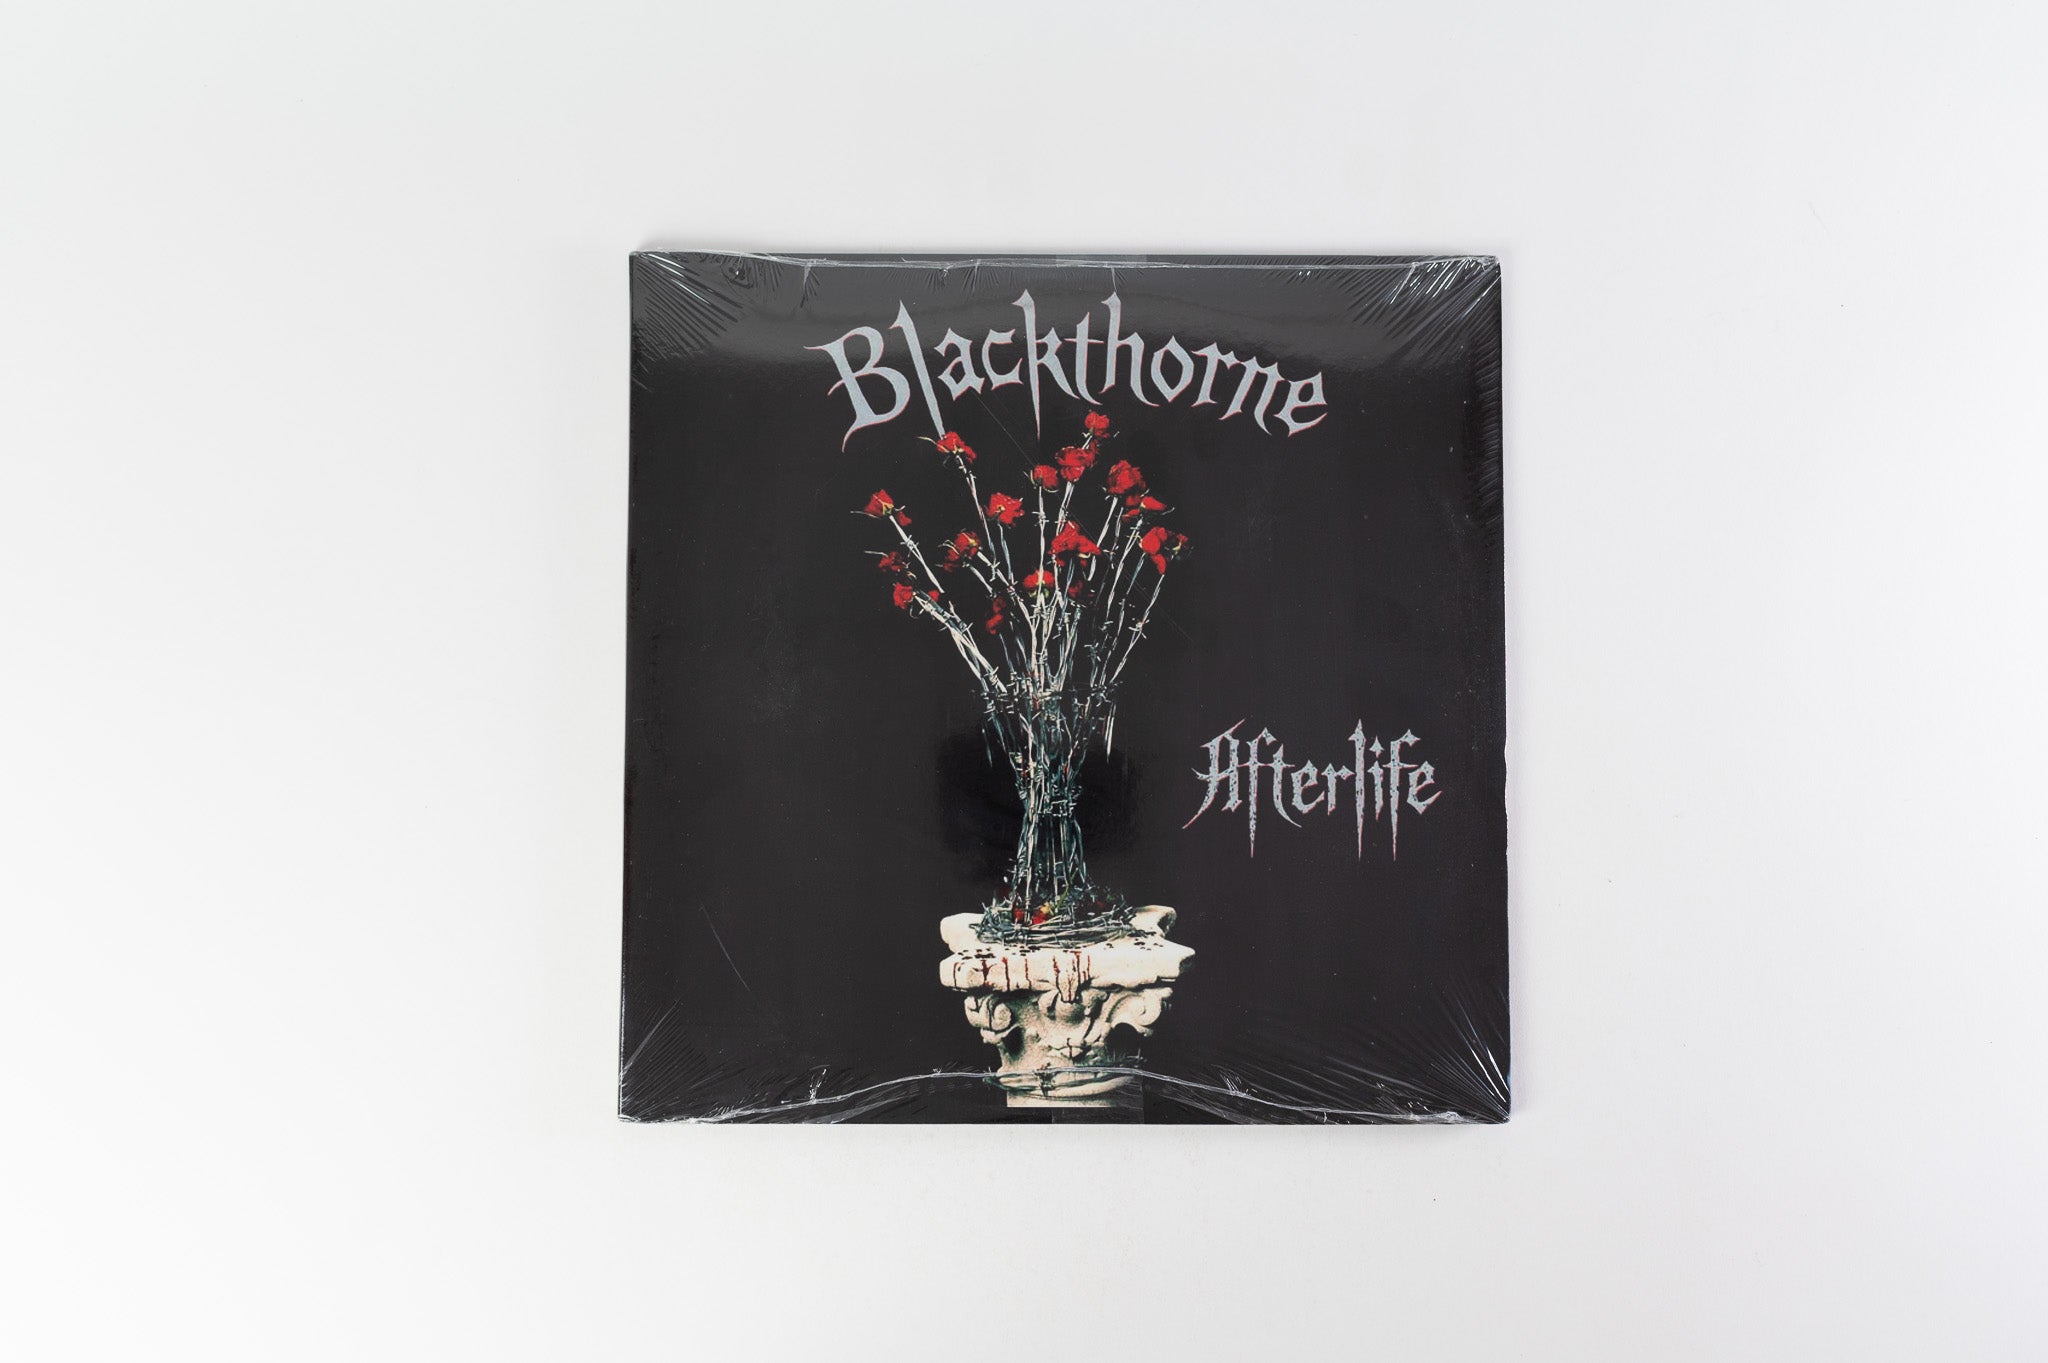 Blackthorne - Afterlife SEALED Reissue on Renaissance Records